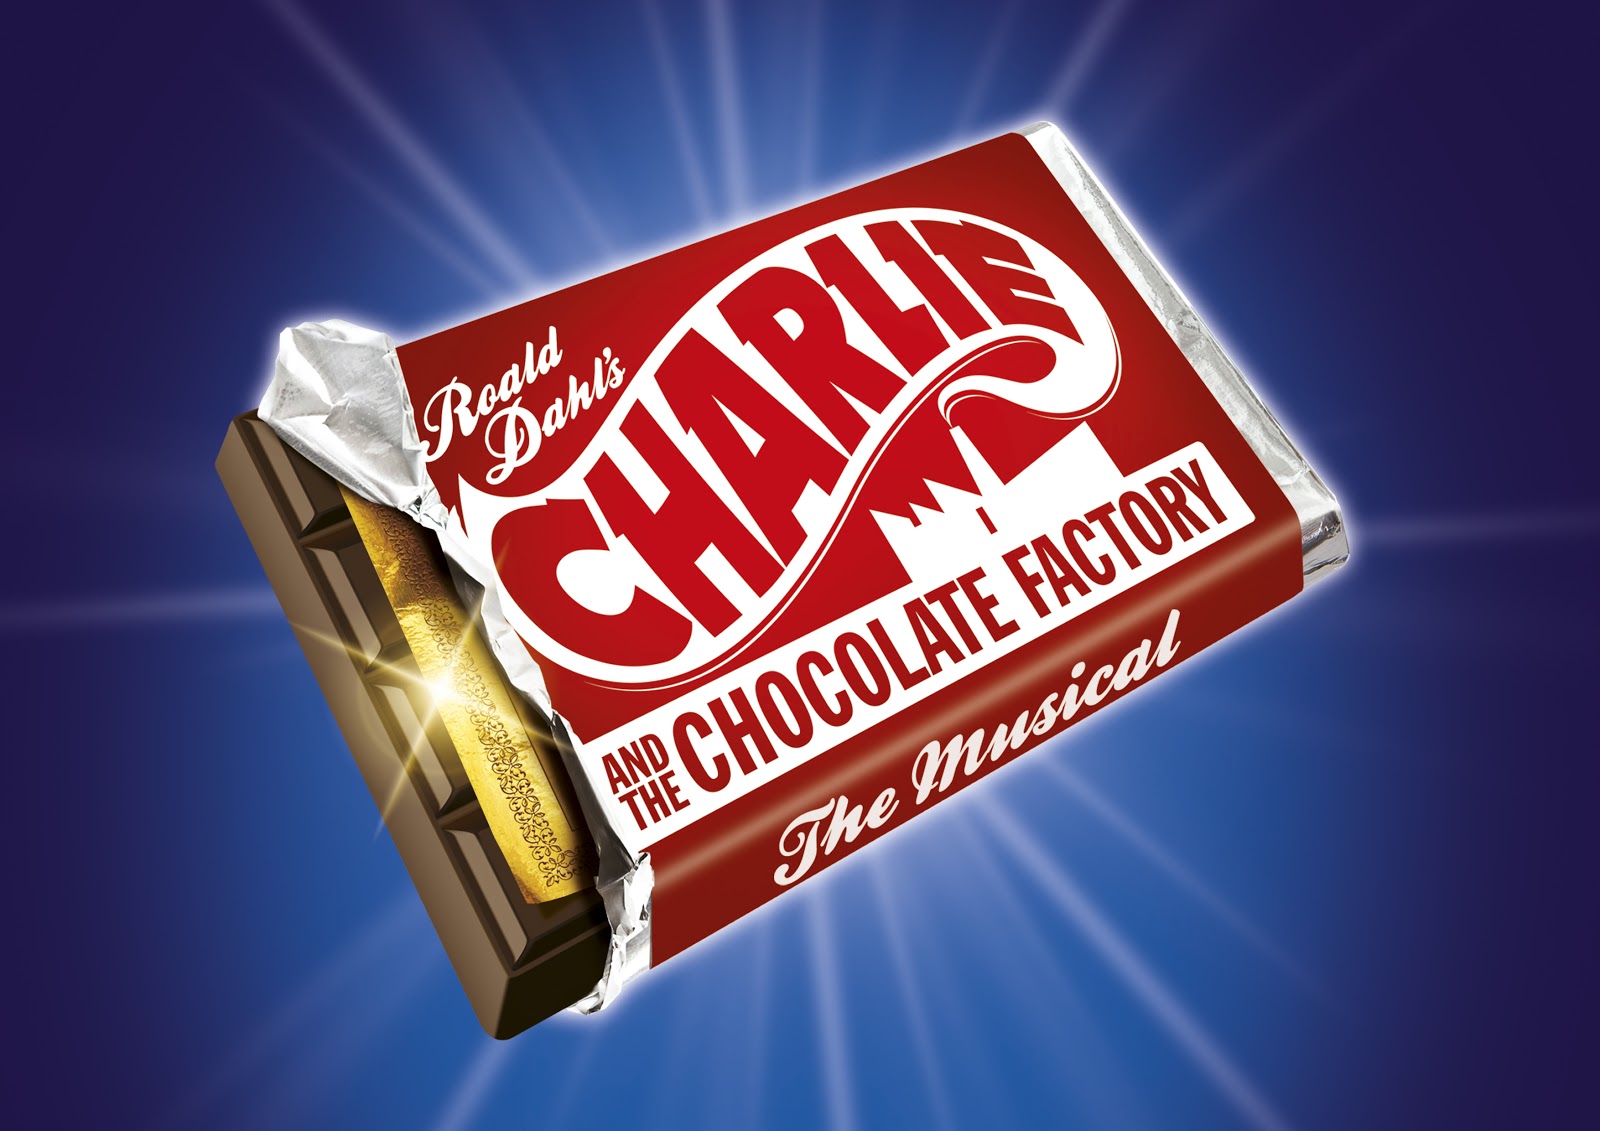 Charlie and the Chocolate Factory logo. Charlie and the Chocolate Factory Musical logo. Charlie and the Chocolate Factory book. Фабрика звезд шоколадка